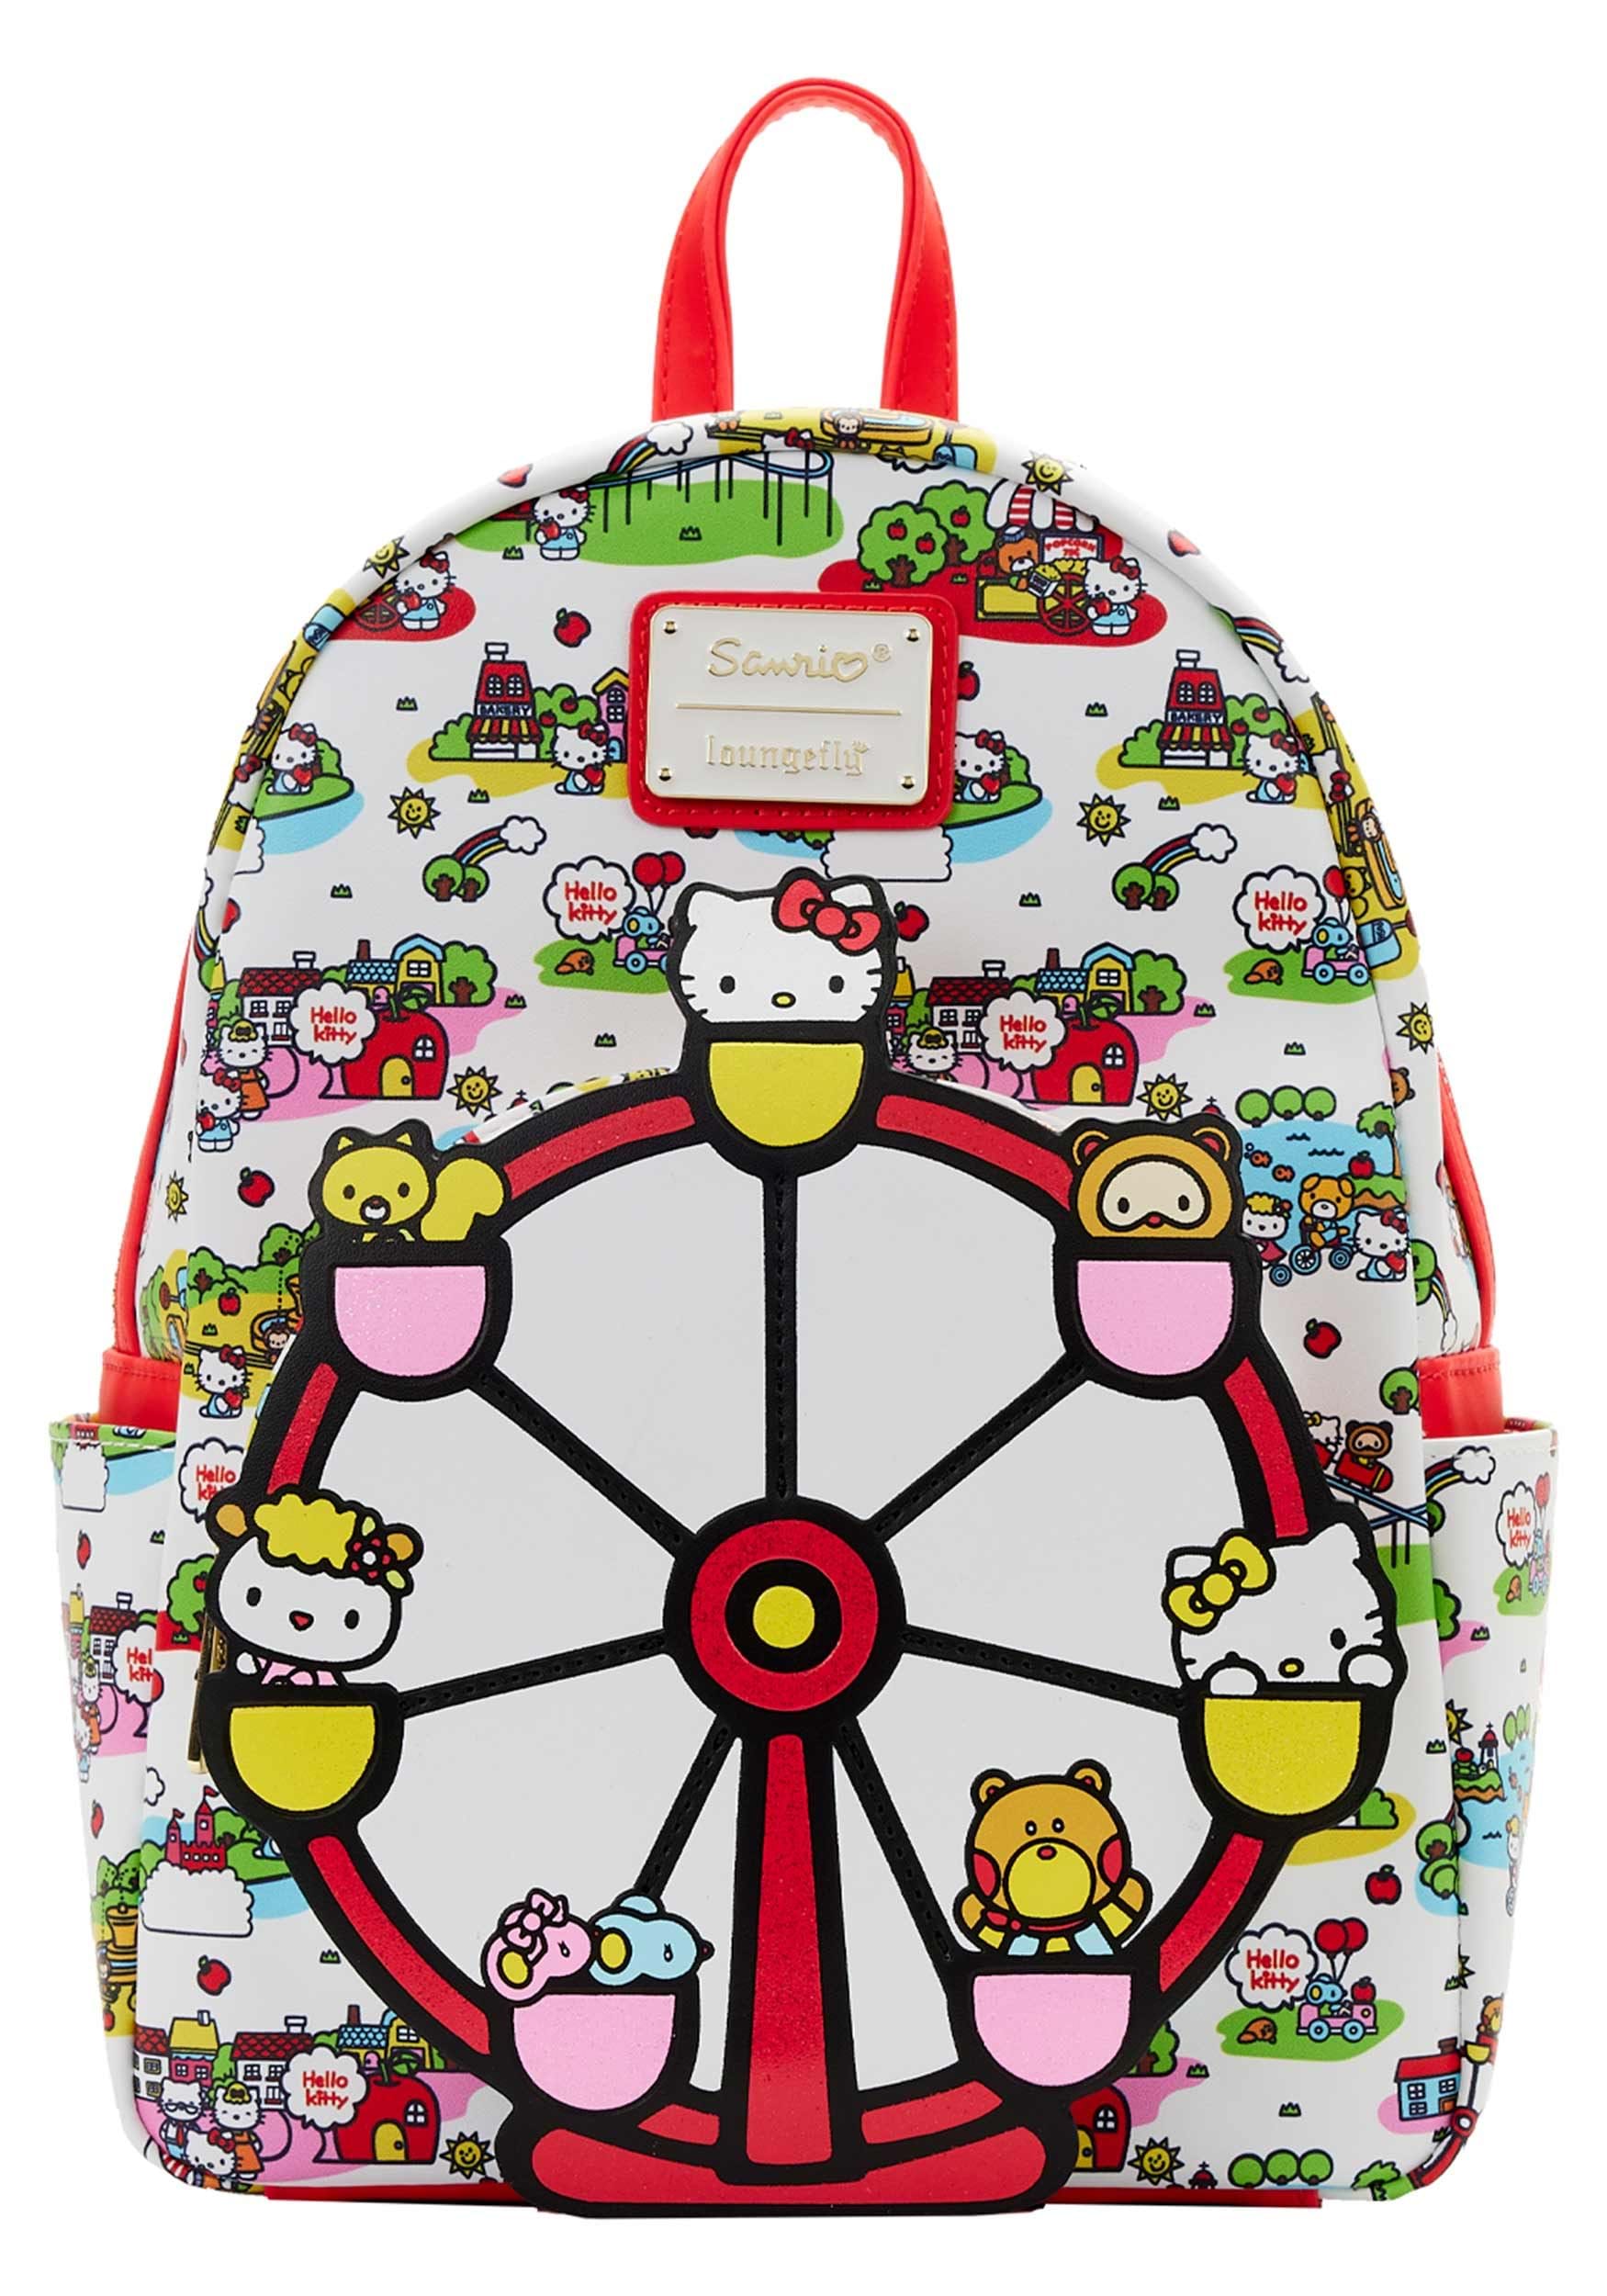 1995 Sanrio Hello Kitty Small Messenger Bag 